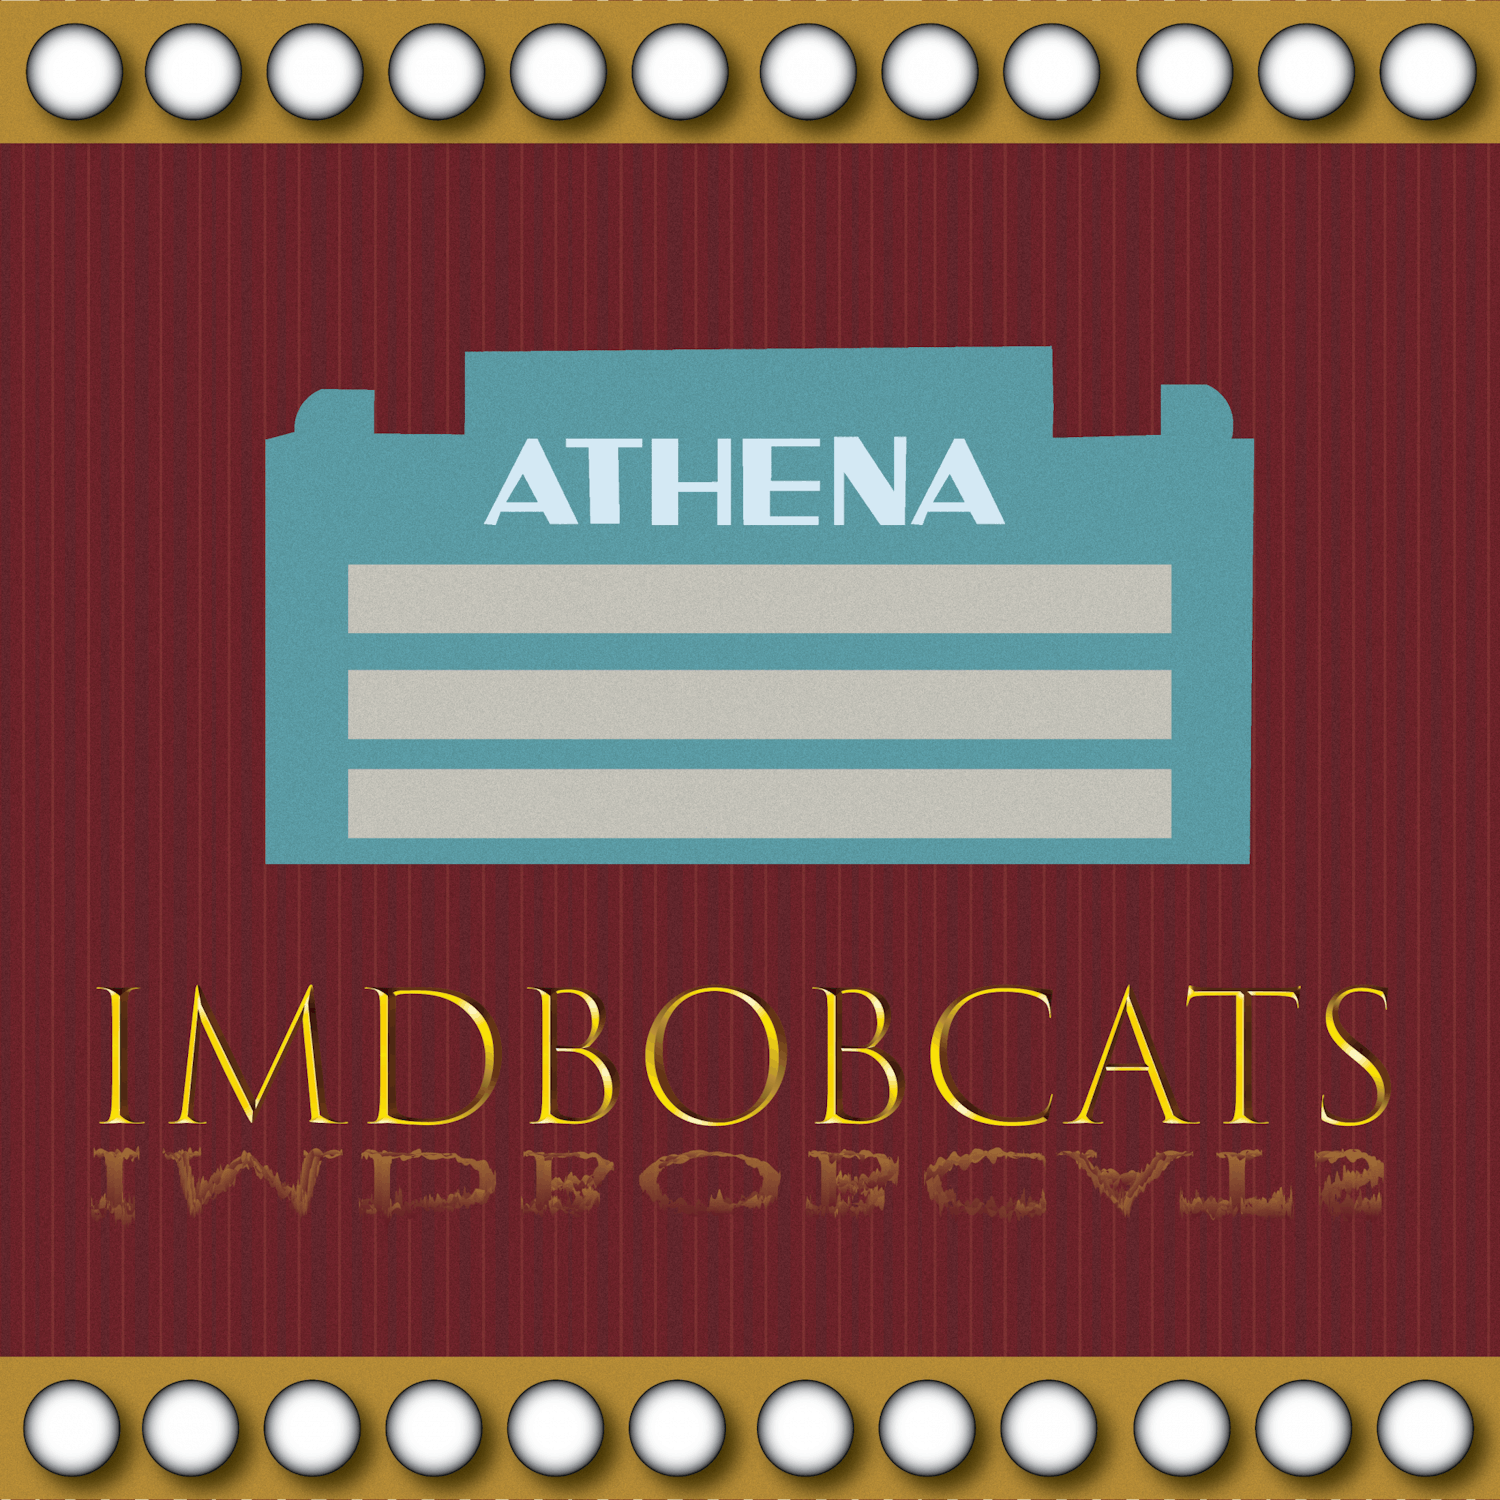 PATTERSON_IMDbobcats_AK.png